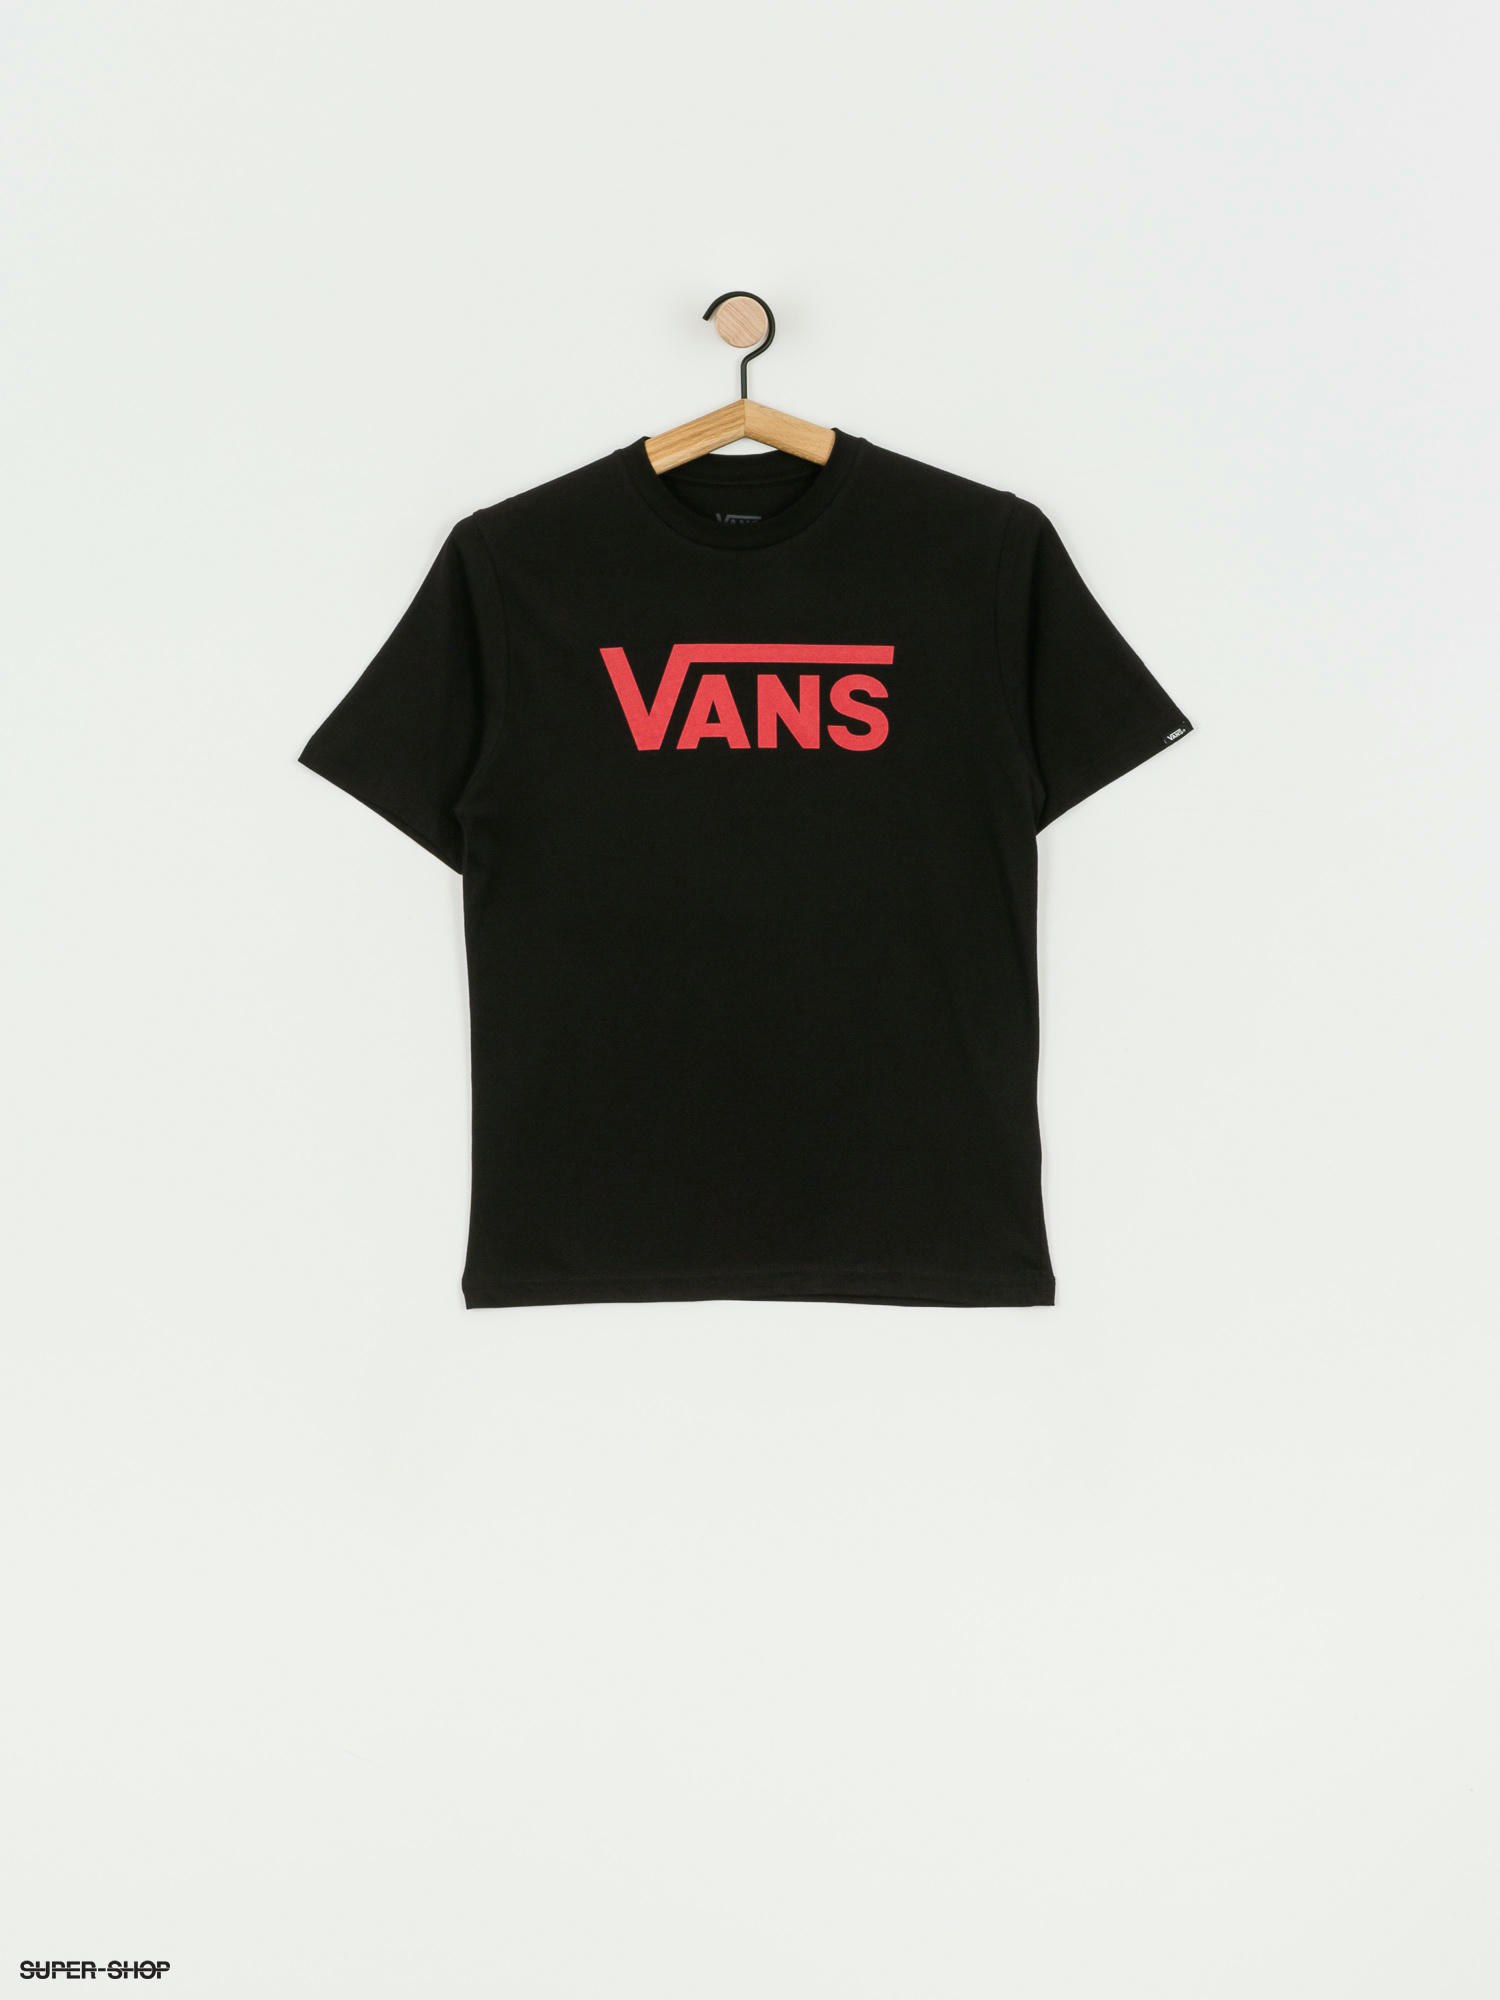 vans classic fit t shirt